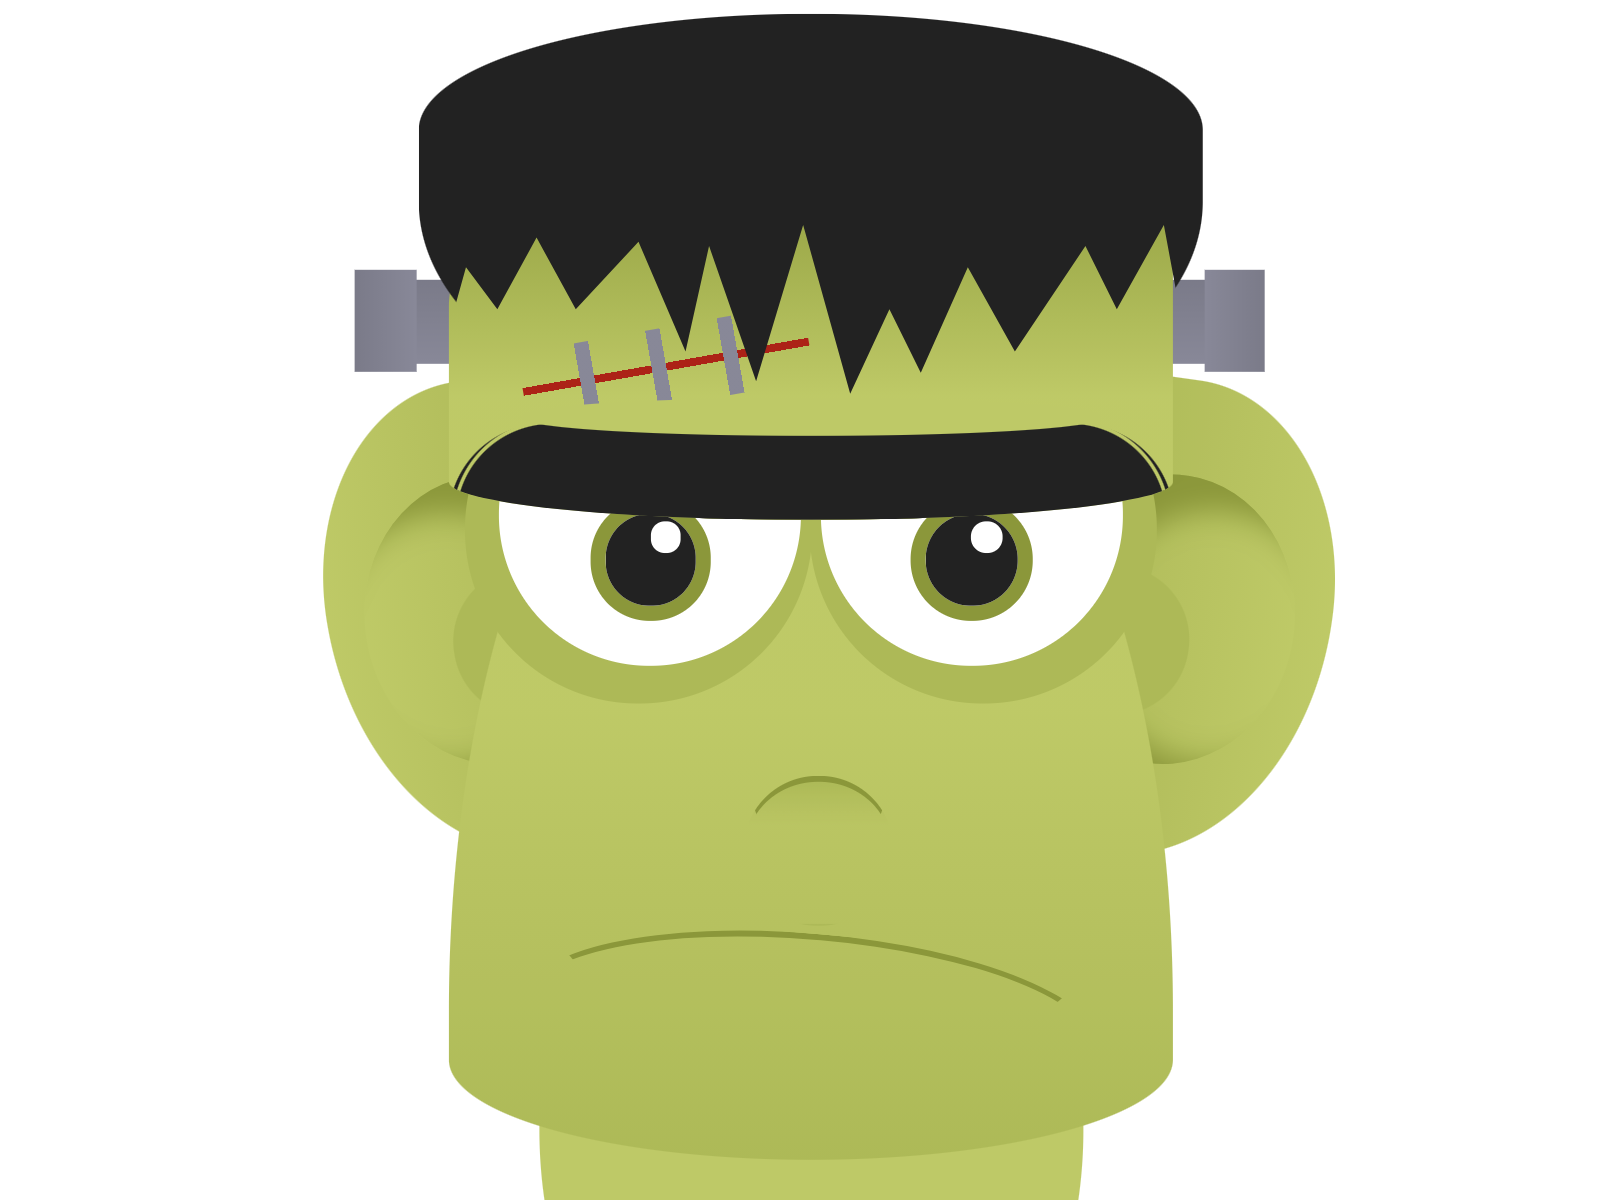 Cartoon of the Frankenstein's monster